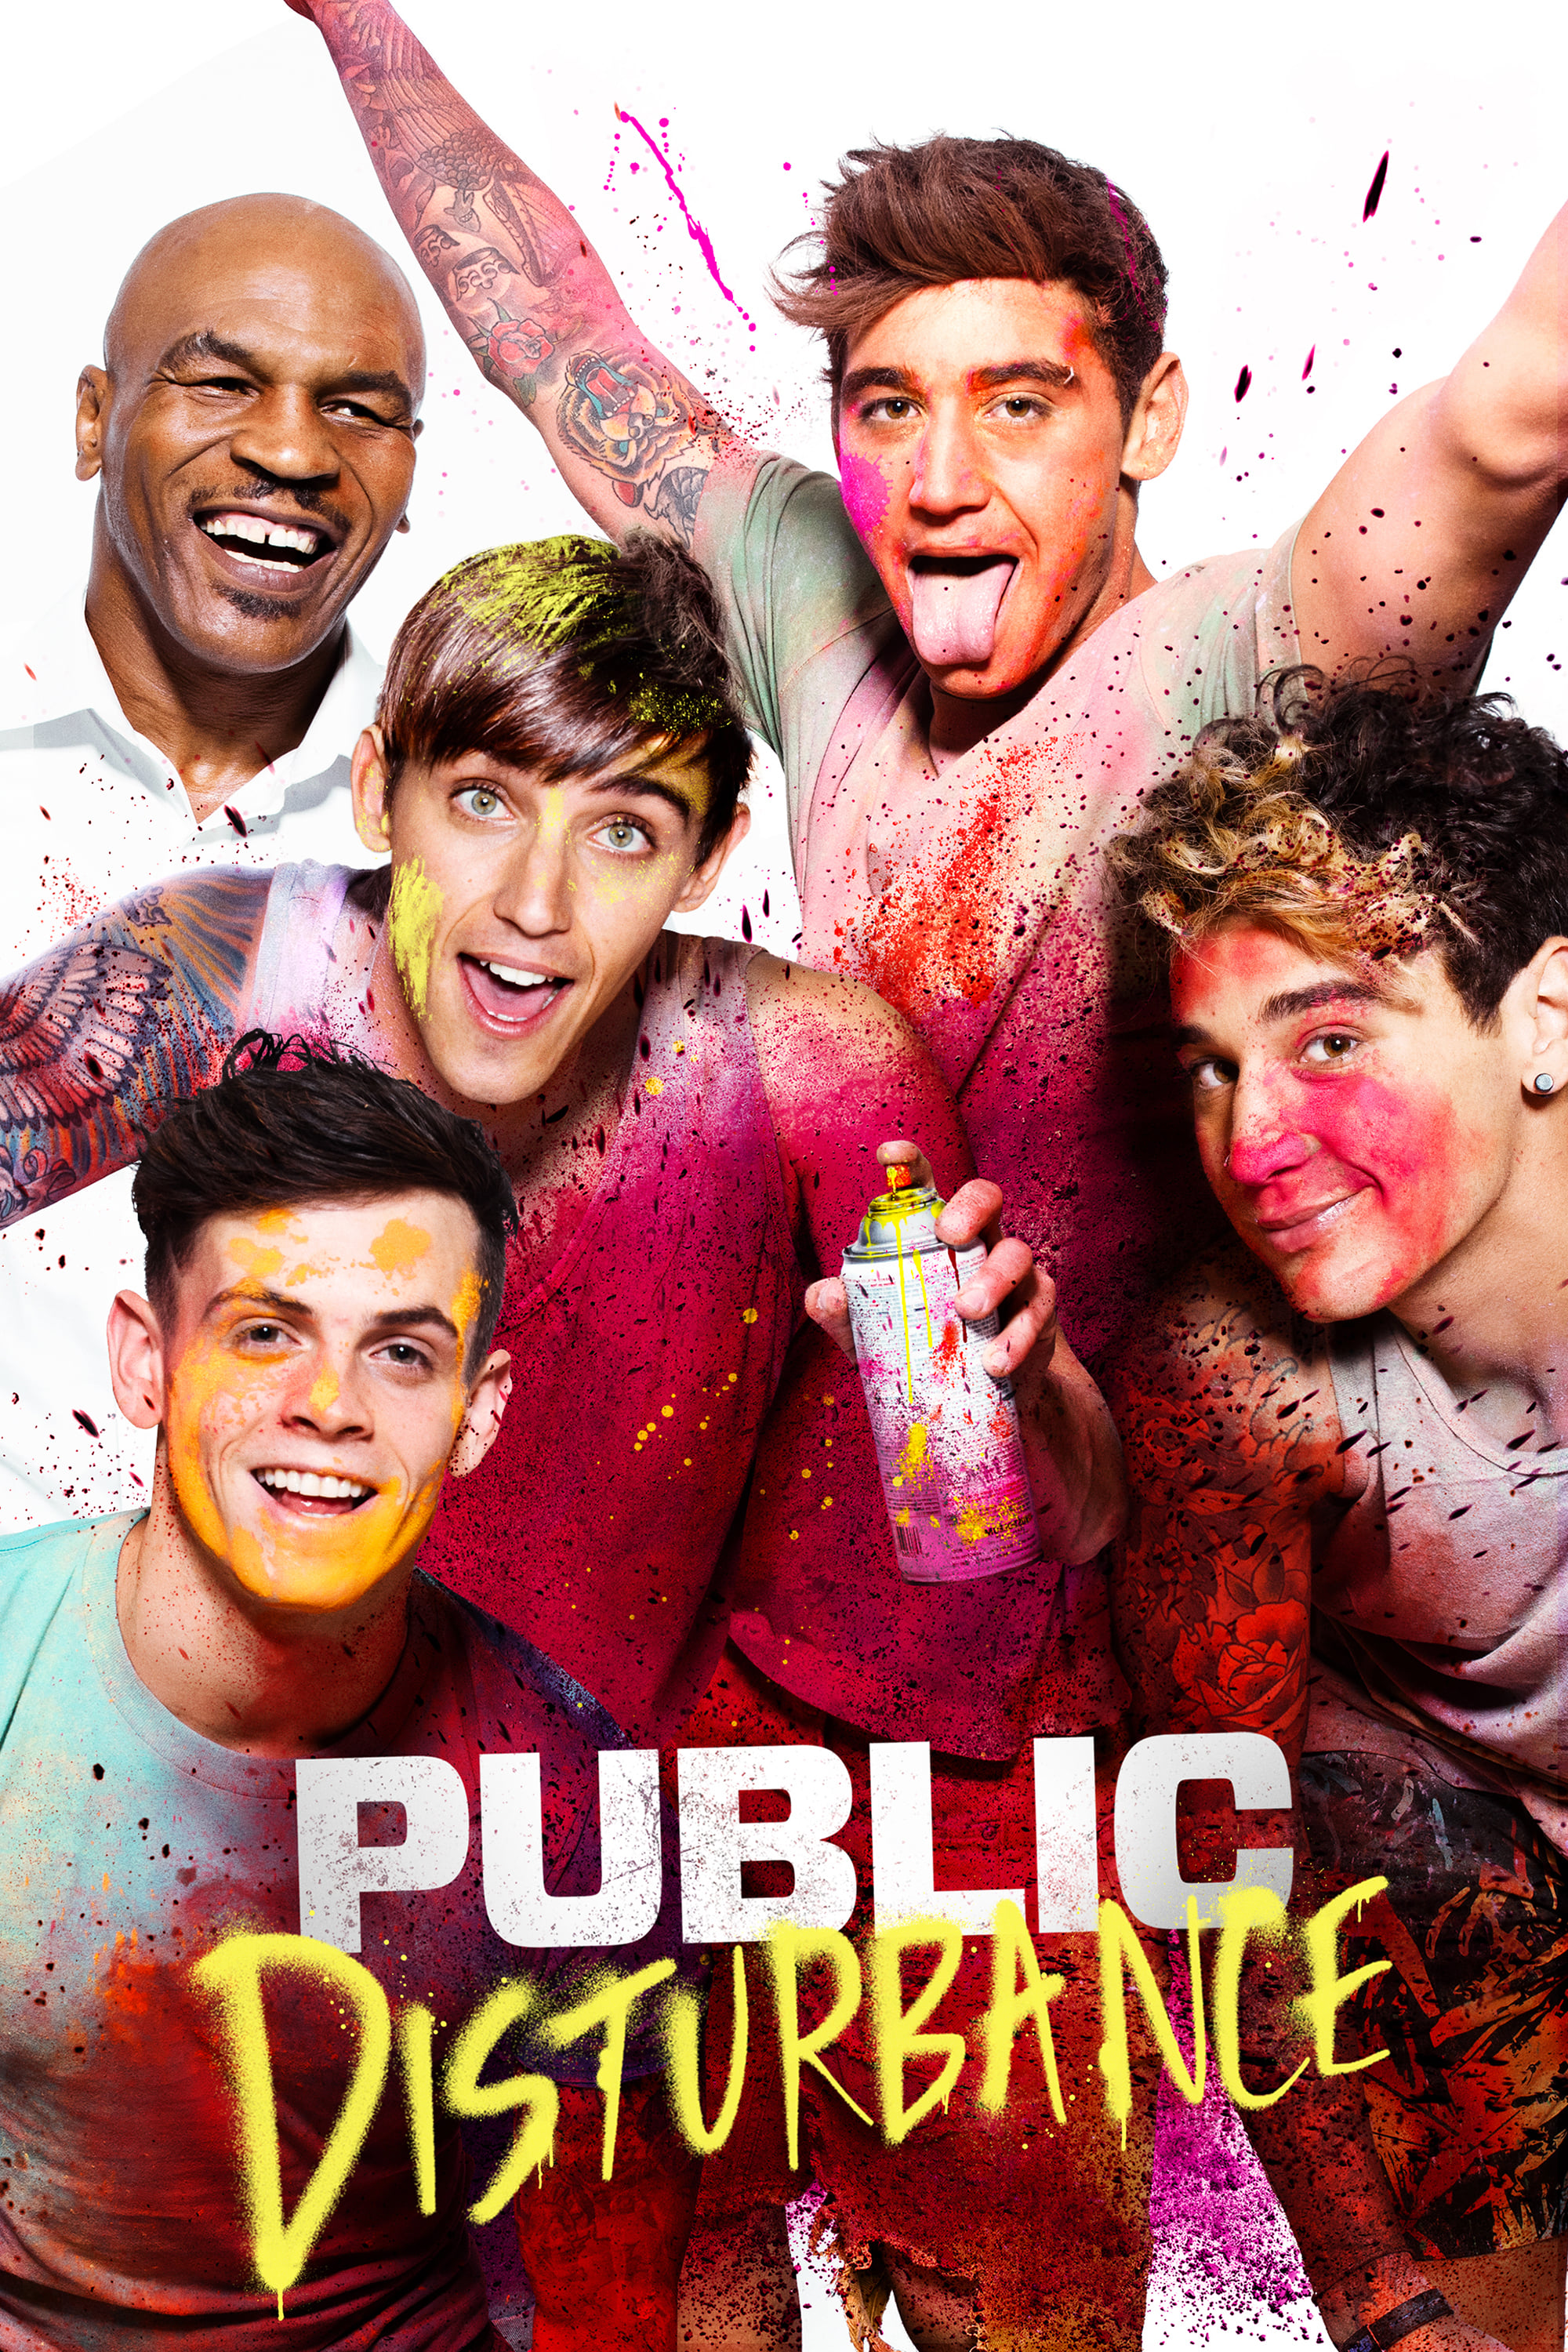 Poster for the movie "Public Disturbance"